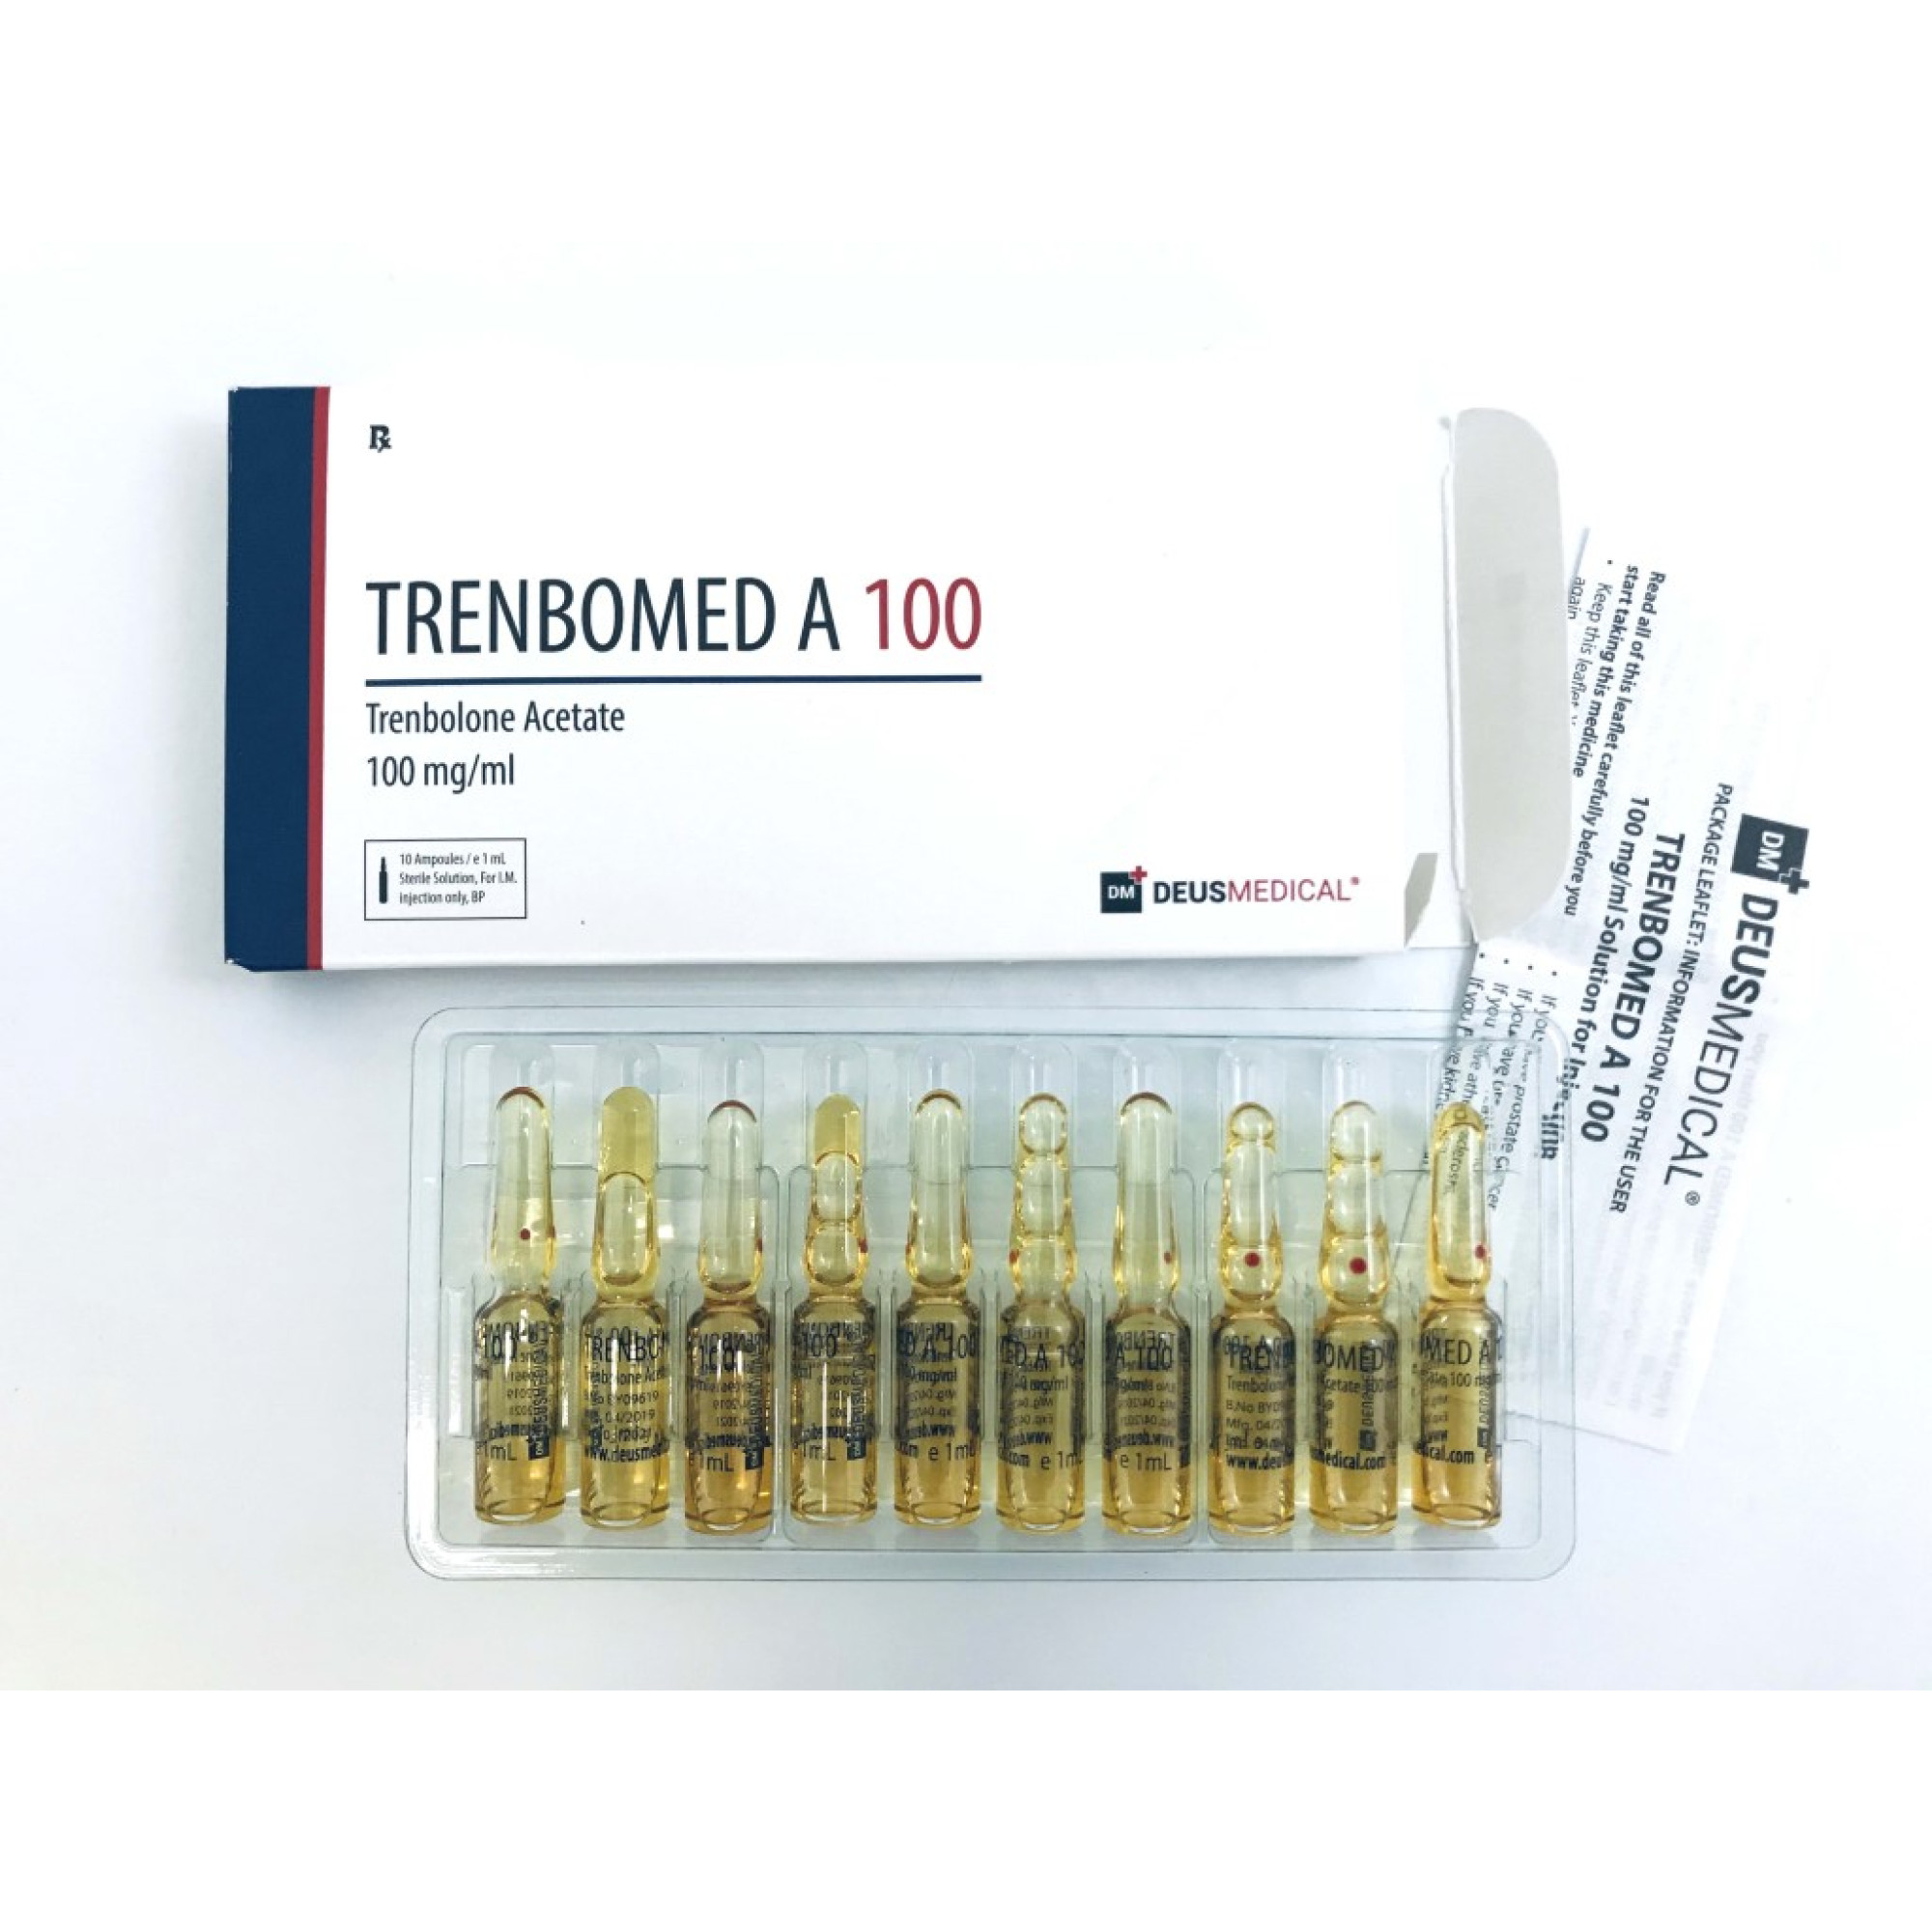 TRENBOMED A 100 (Trenbolone Acetate), DEUS MEDICAL, BUY STEROIDS ONLINE - www.DEUSPOWER.com